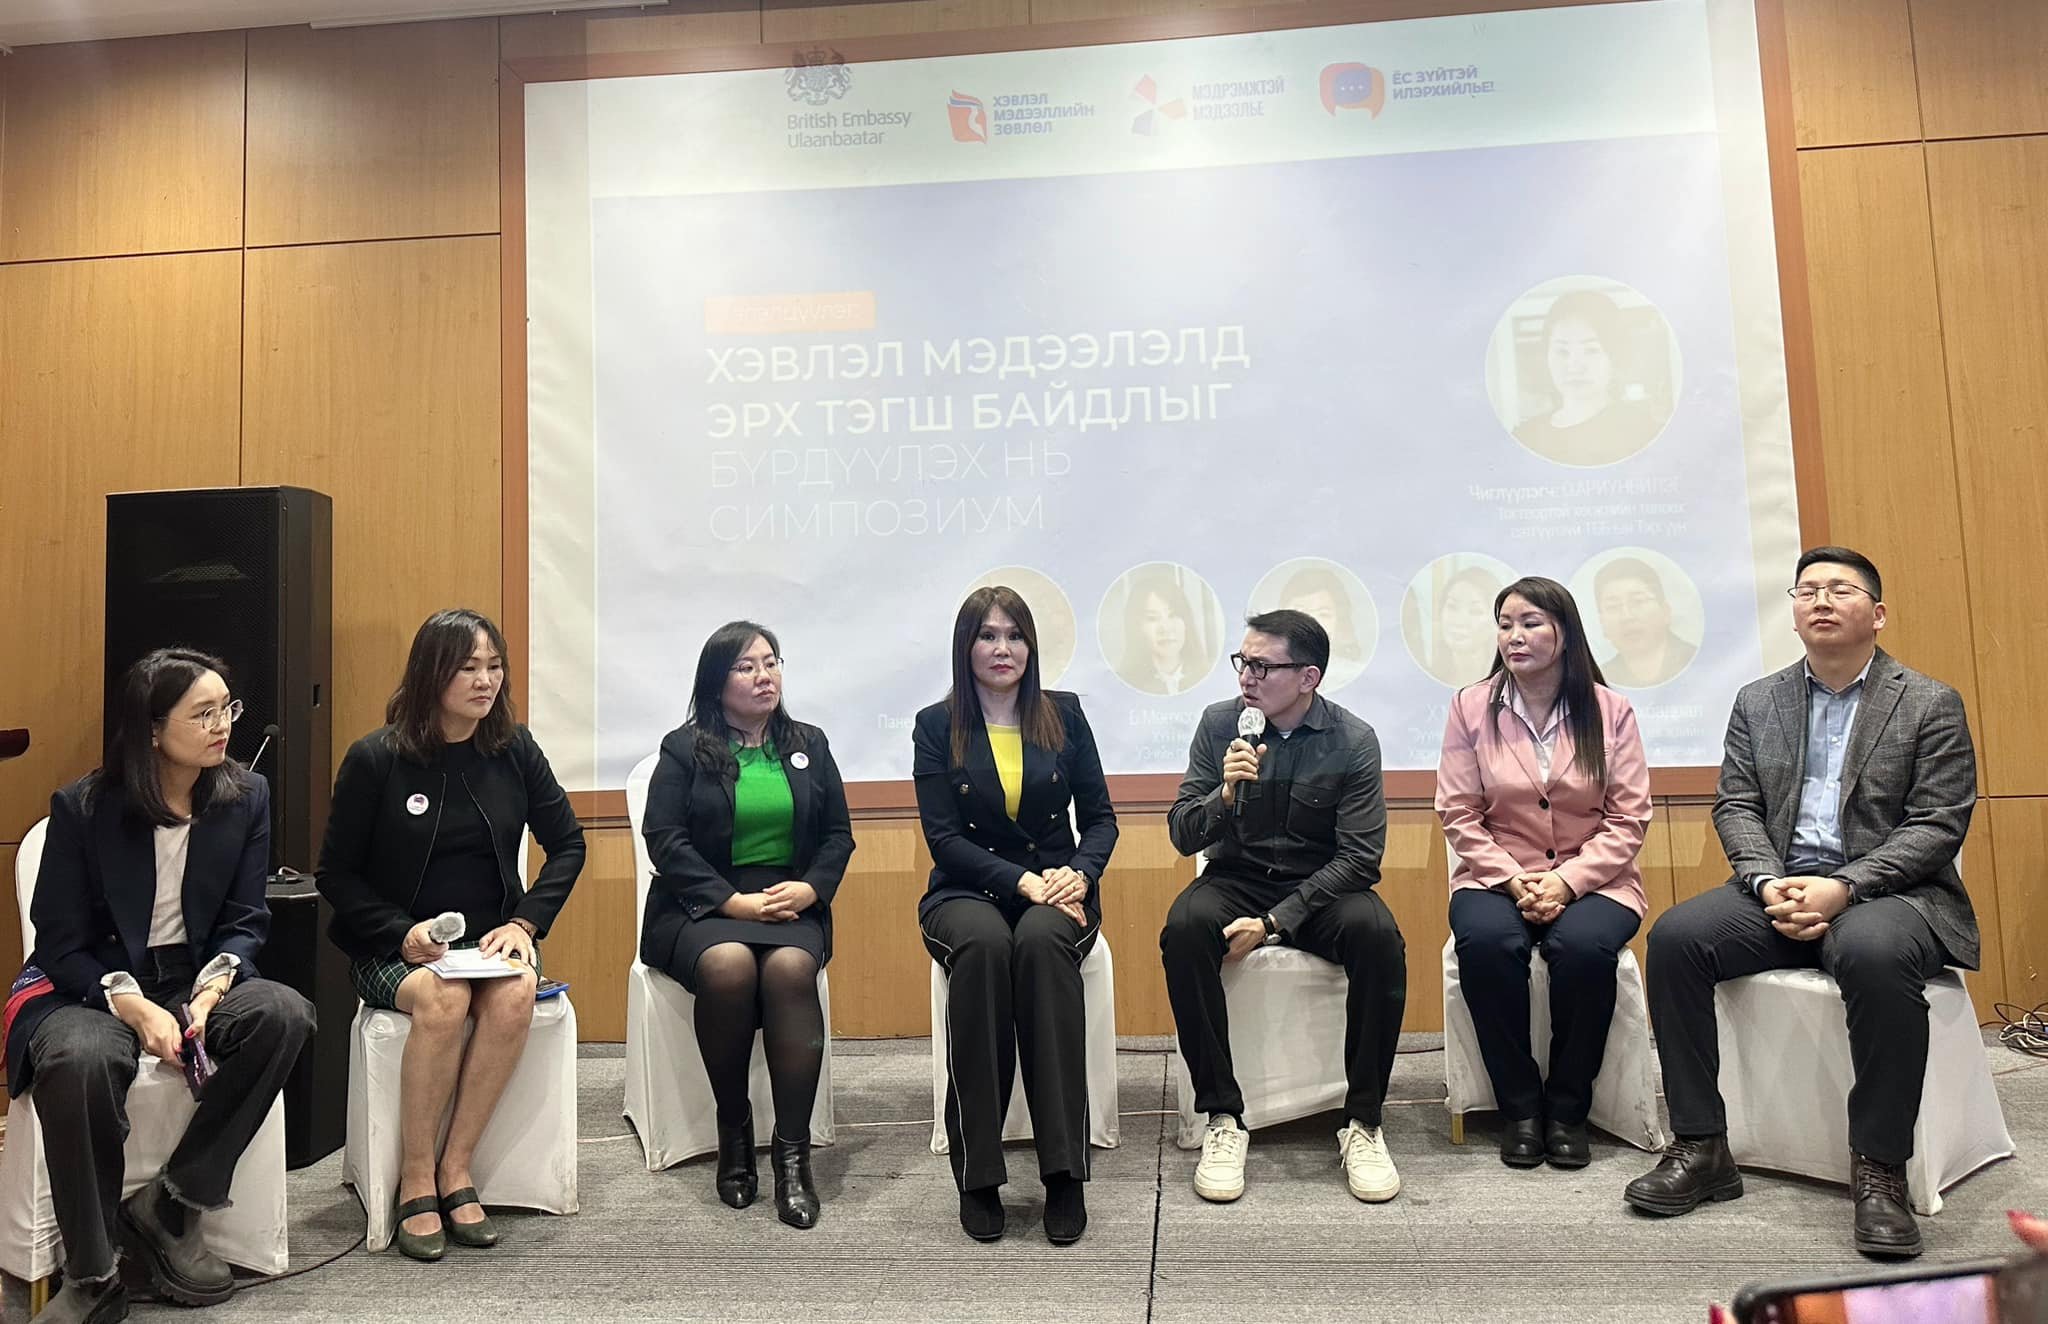 Ensuring gender equality in media discussed